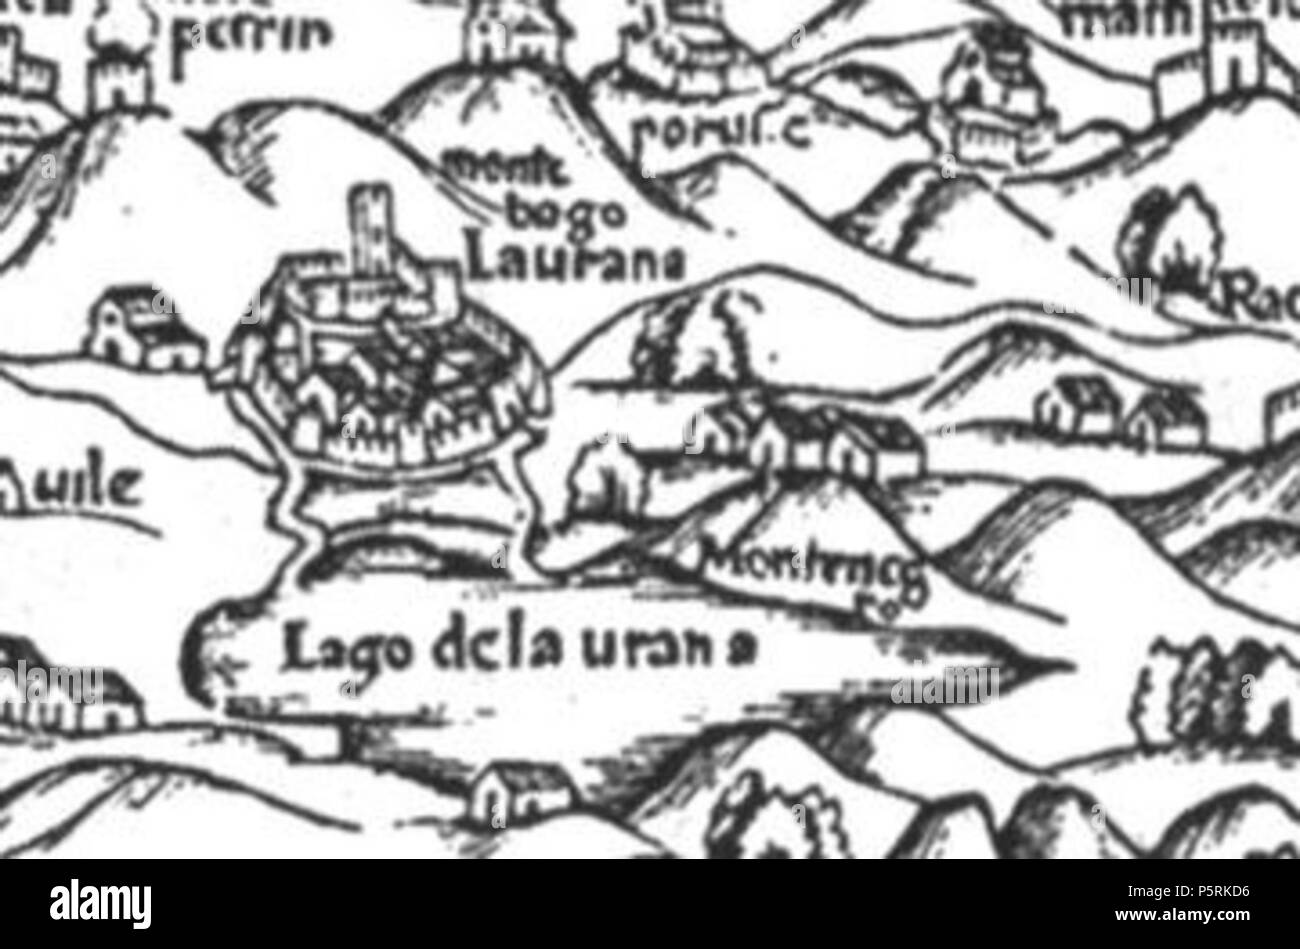 N/A. Anglais : Burg Vrana autour de 1525 de la carte des Pagano nord de la Dalmatie . 1525. Matteo Pagano (1515-1588), cartographe vénitien 250 Burg Vrana Pagano Banque D'Images